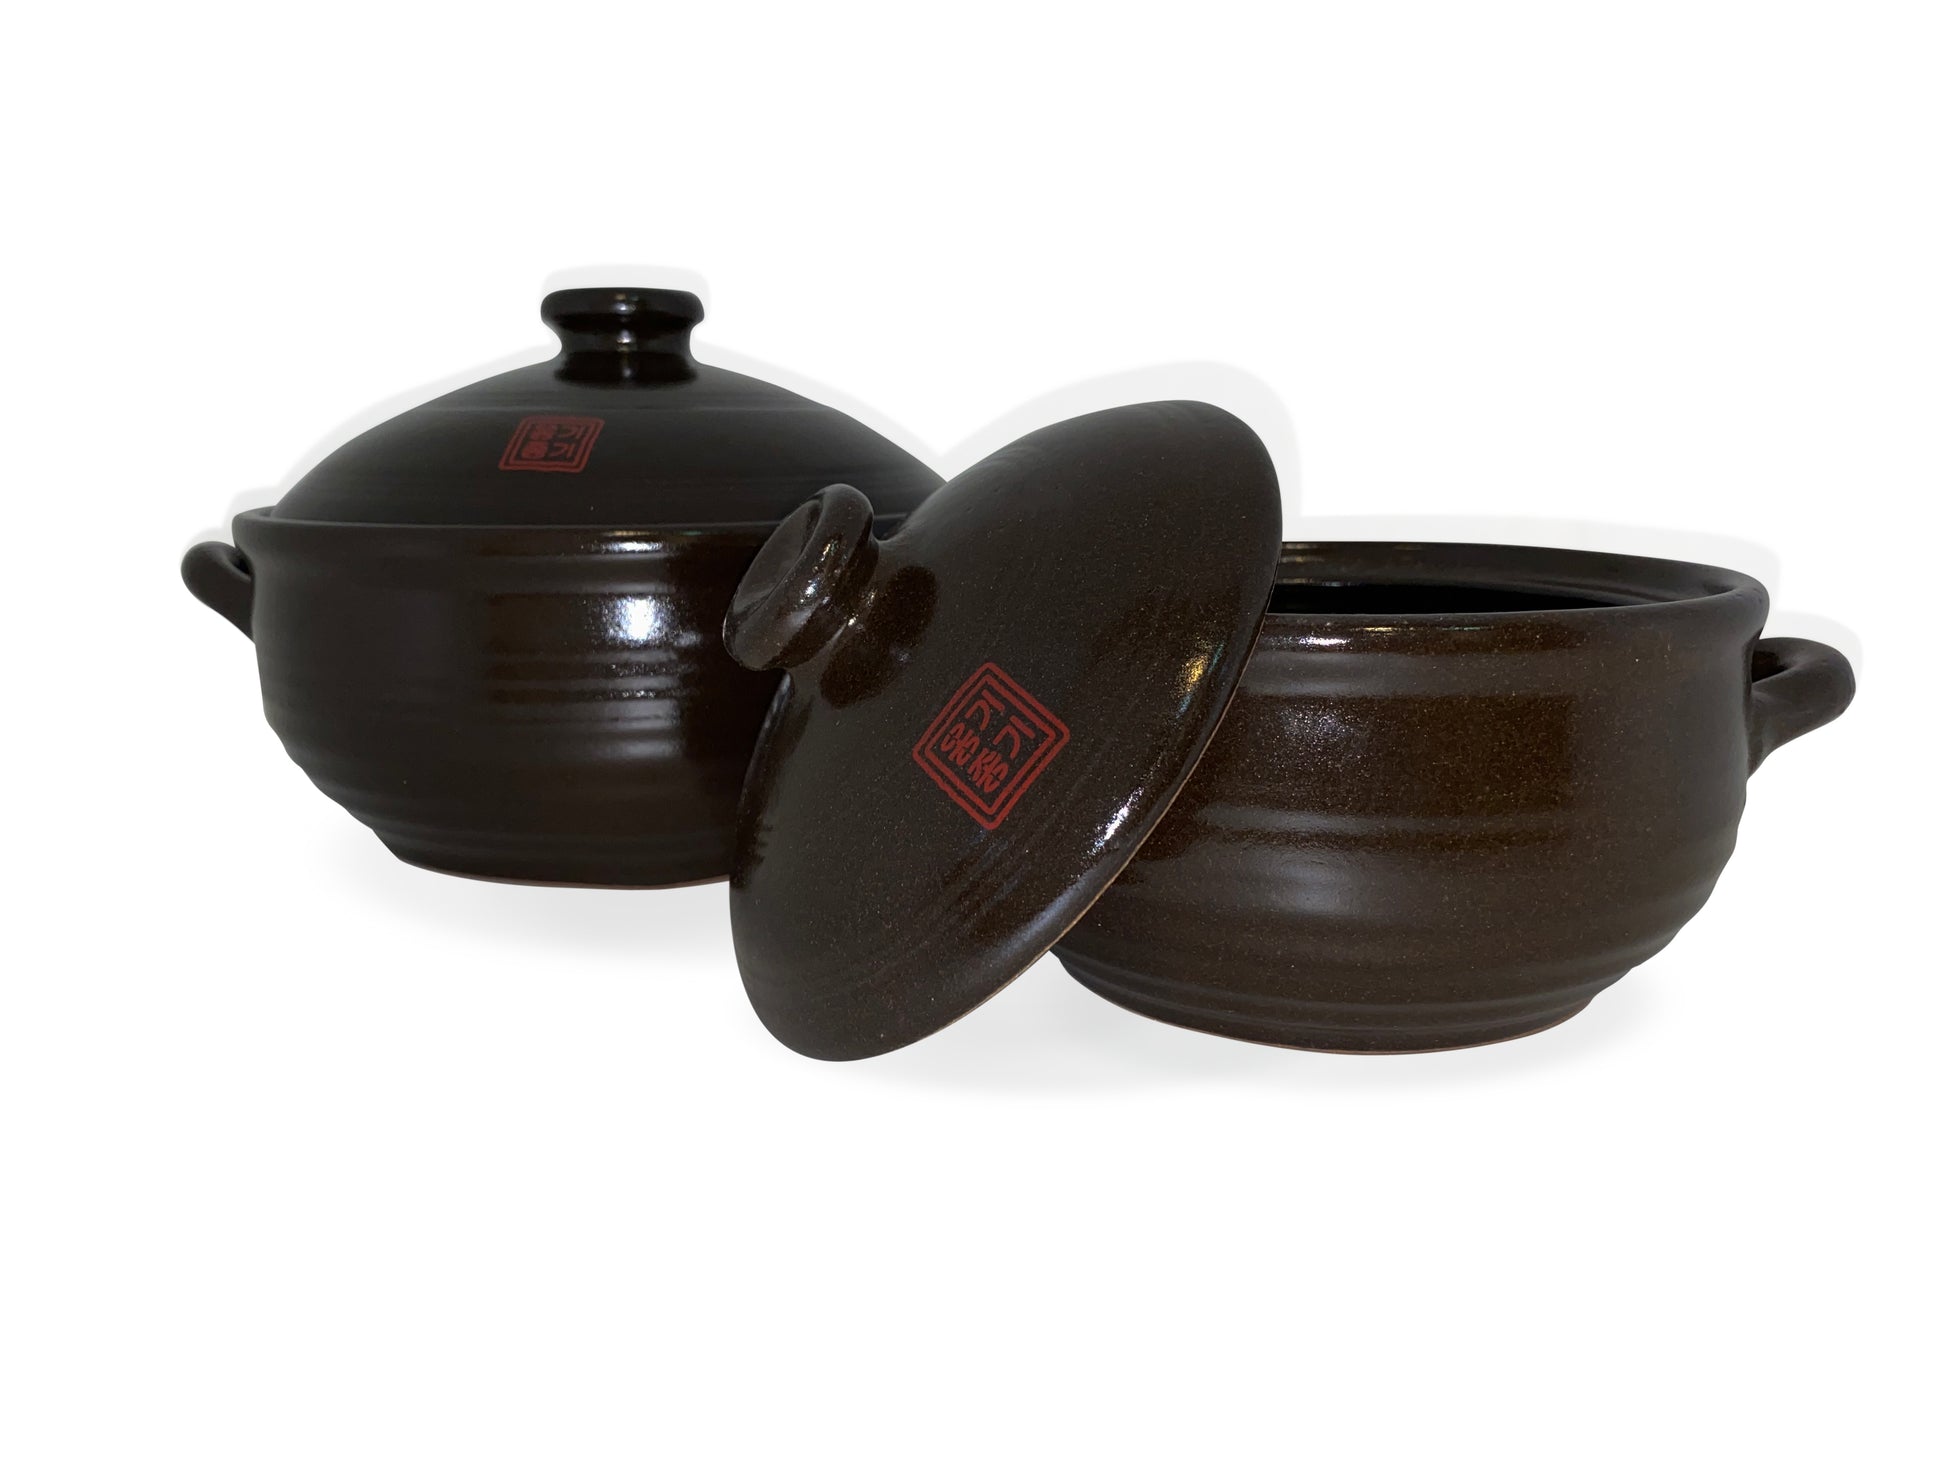  OnggiJonggi Korean Earthenware Clay Hot Pot (700ml